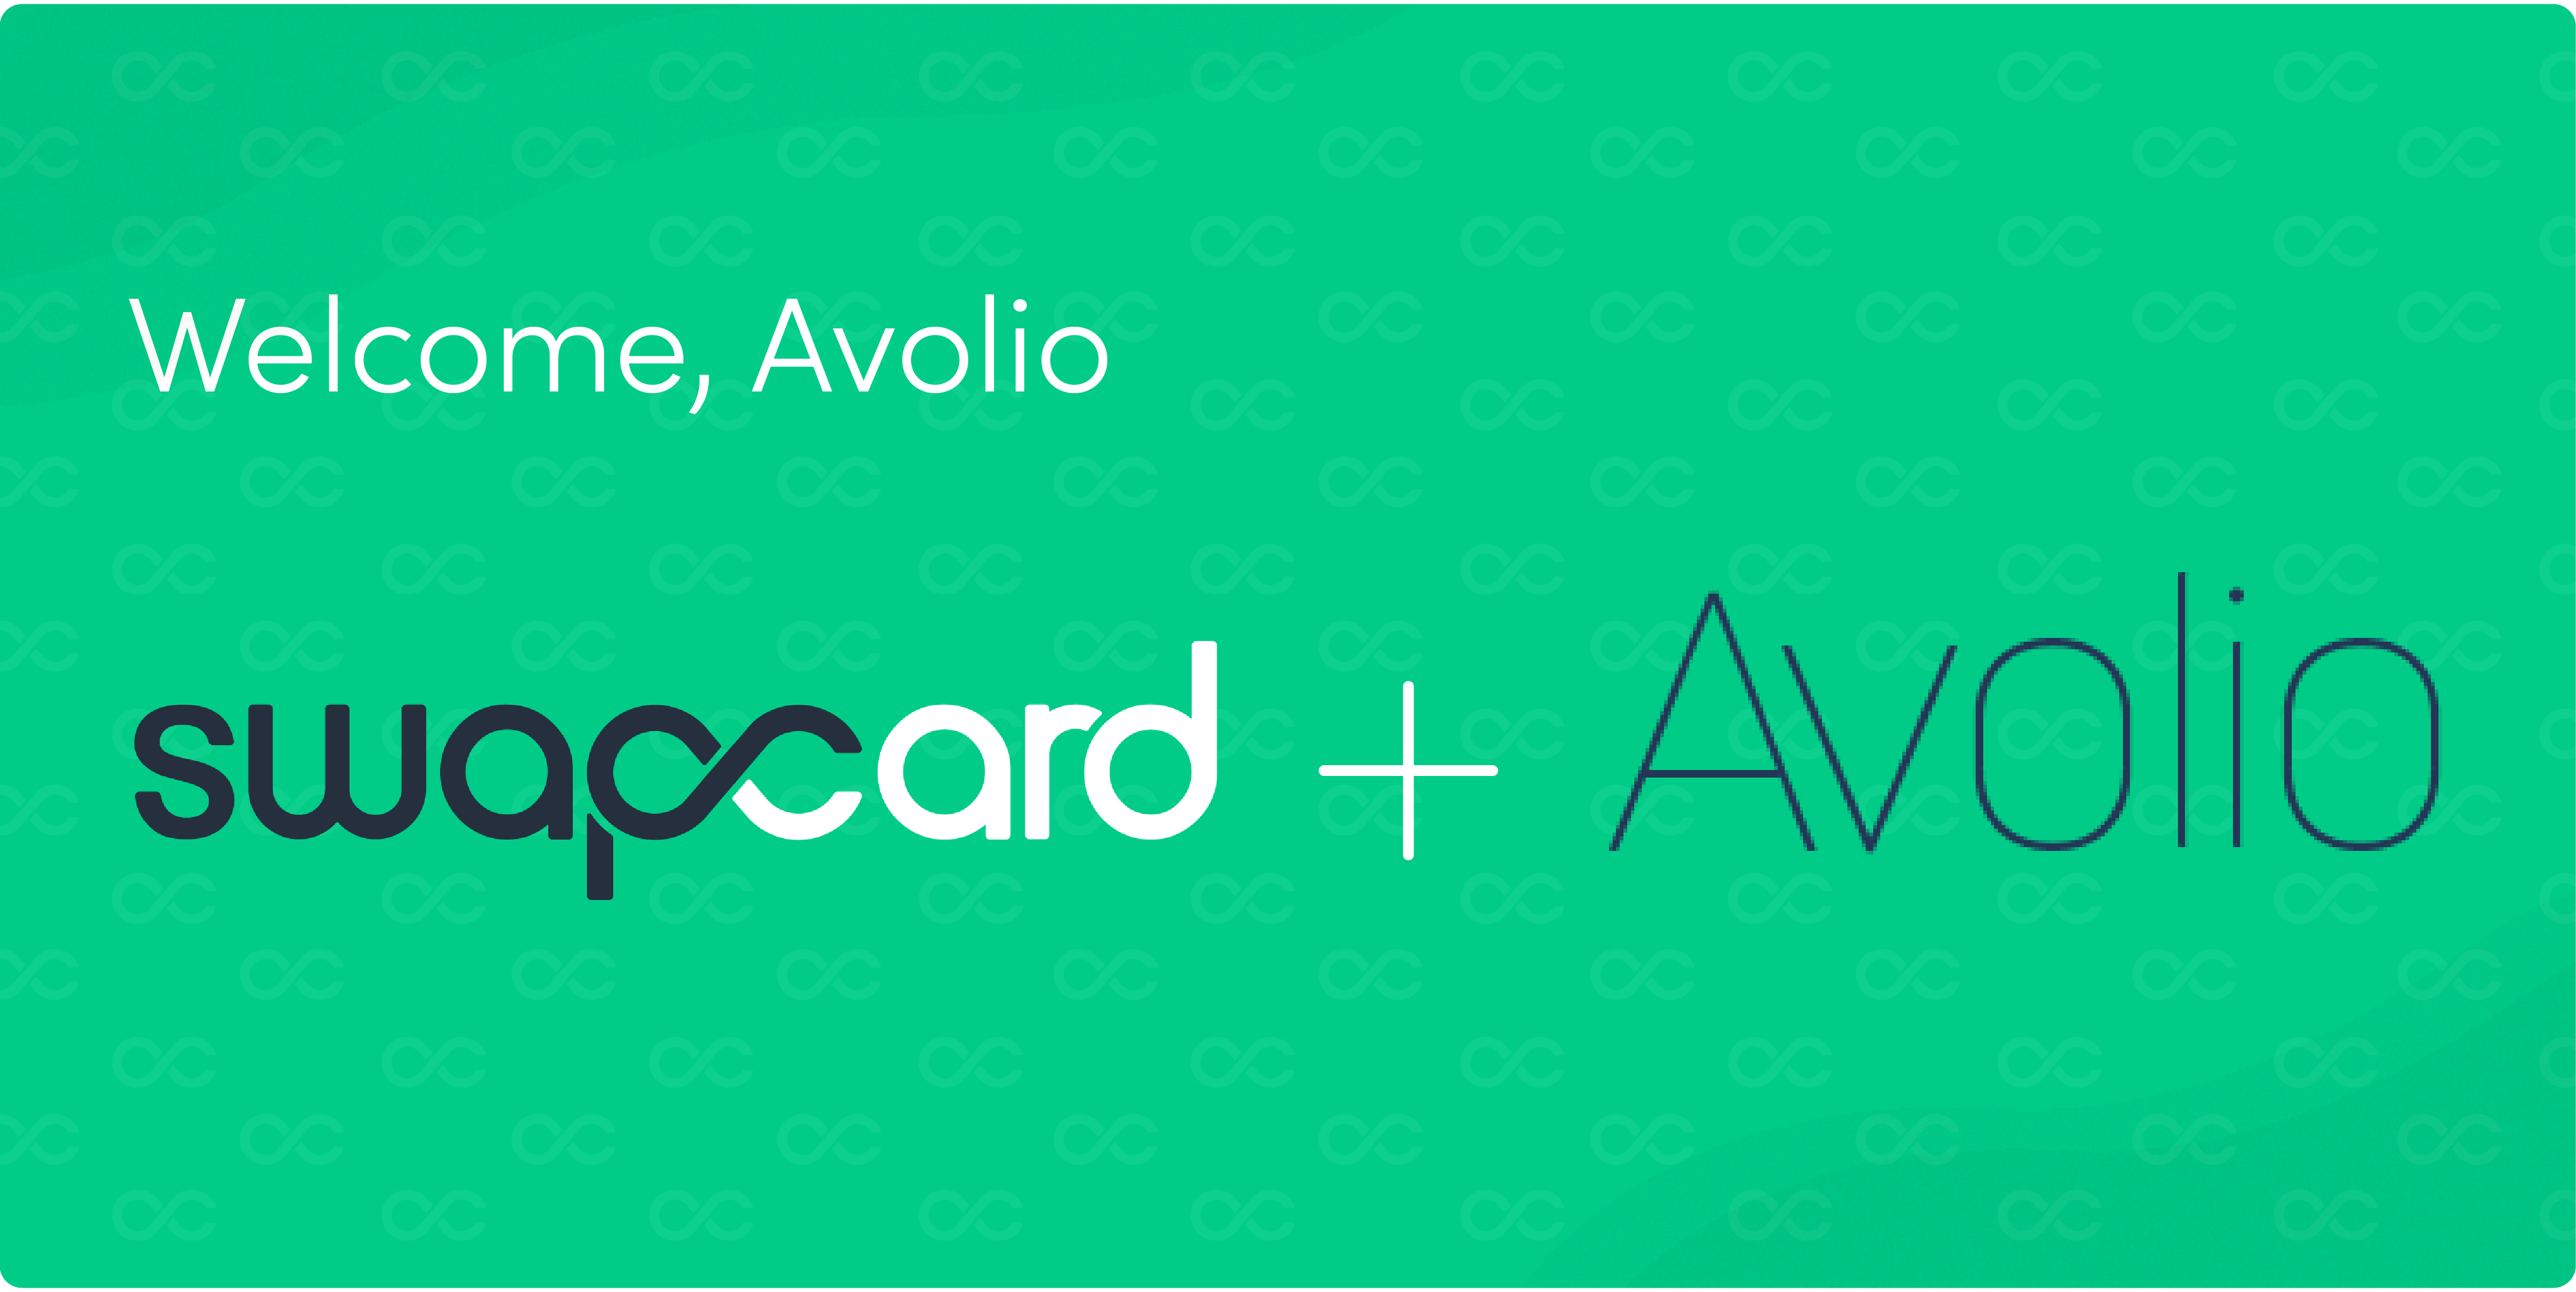 Hot off the press: Swapcard Acquires Avolio, Inc. and Integrates Registration Into Event Platform